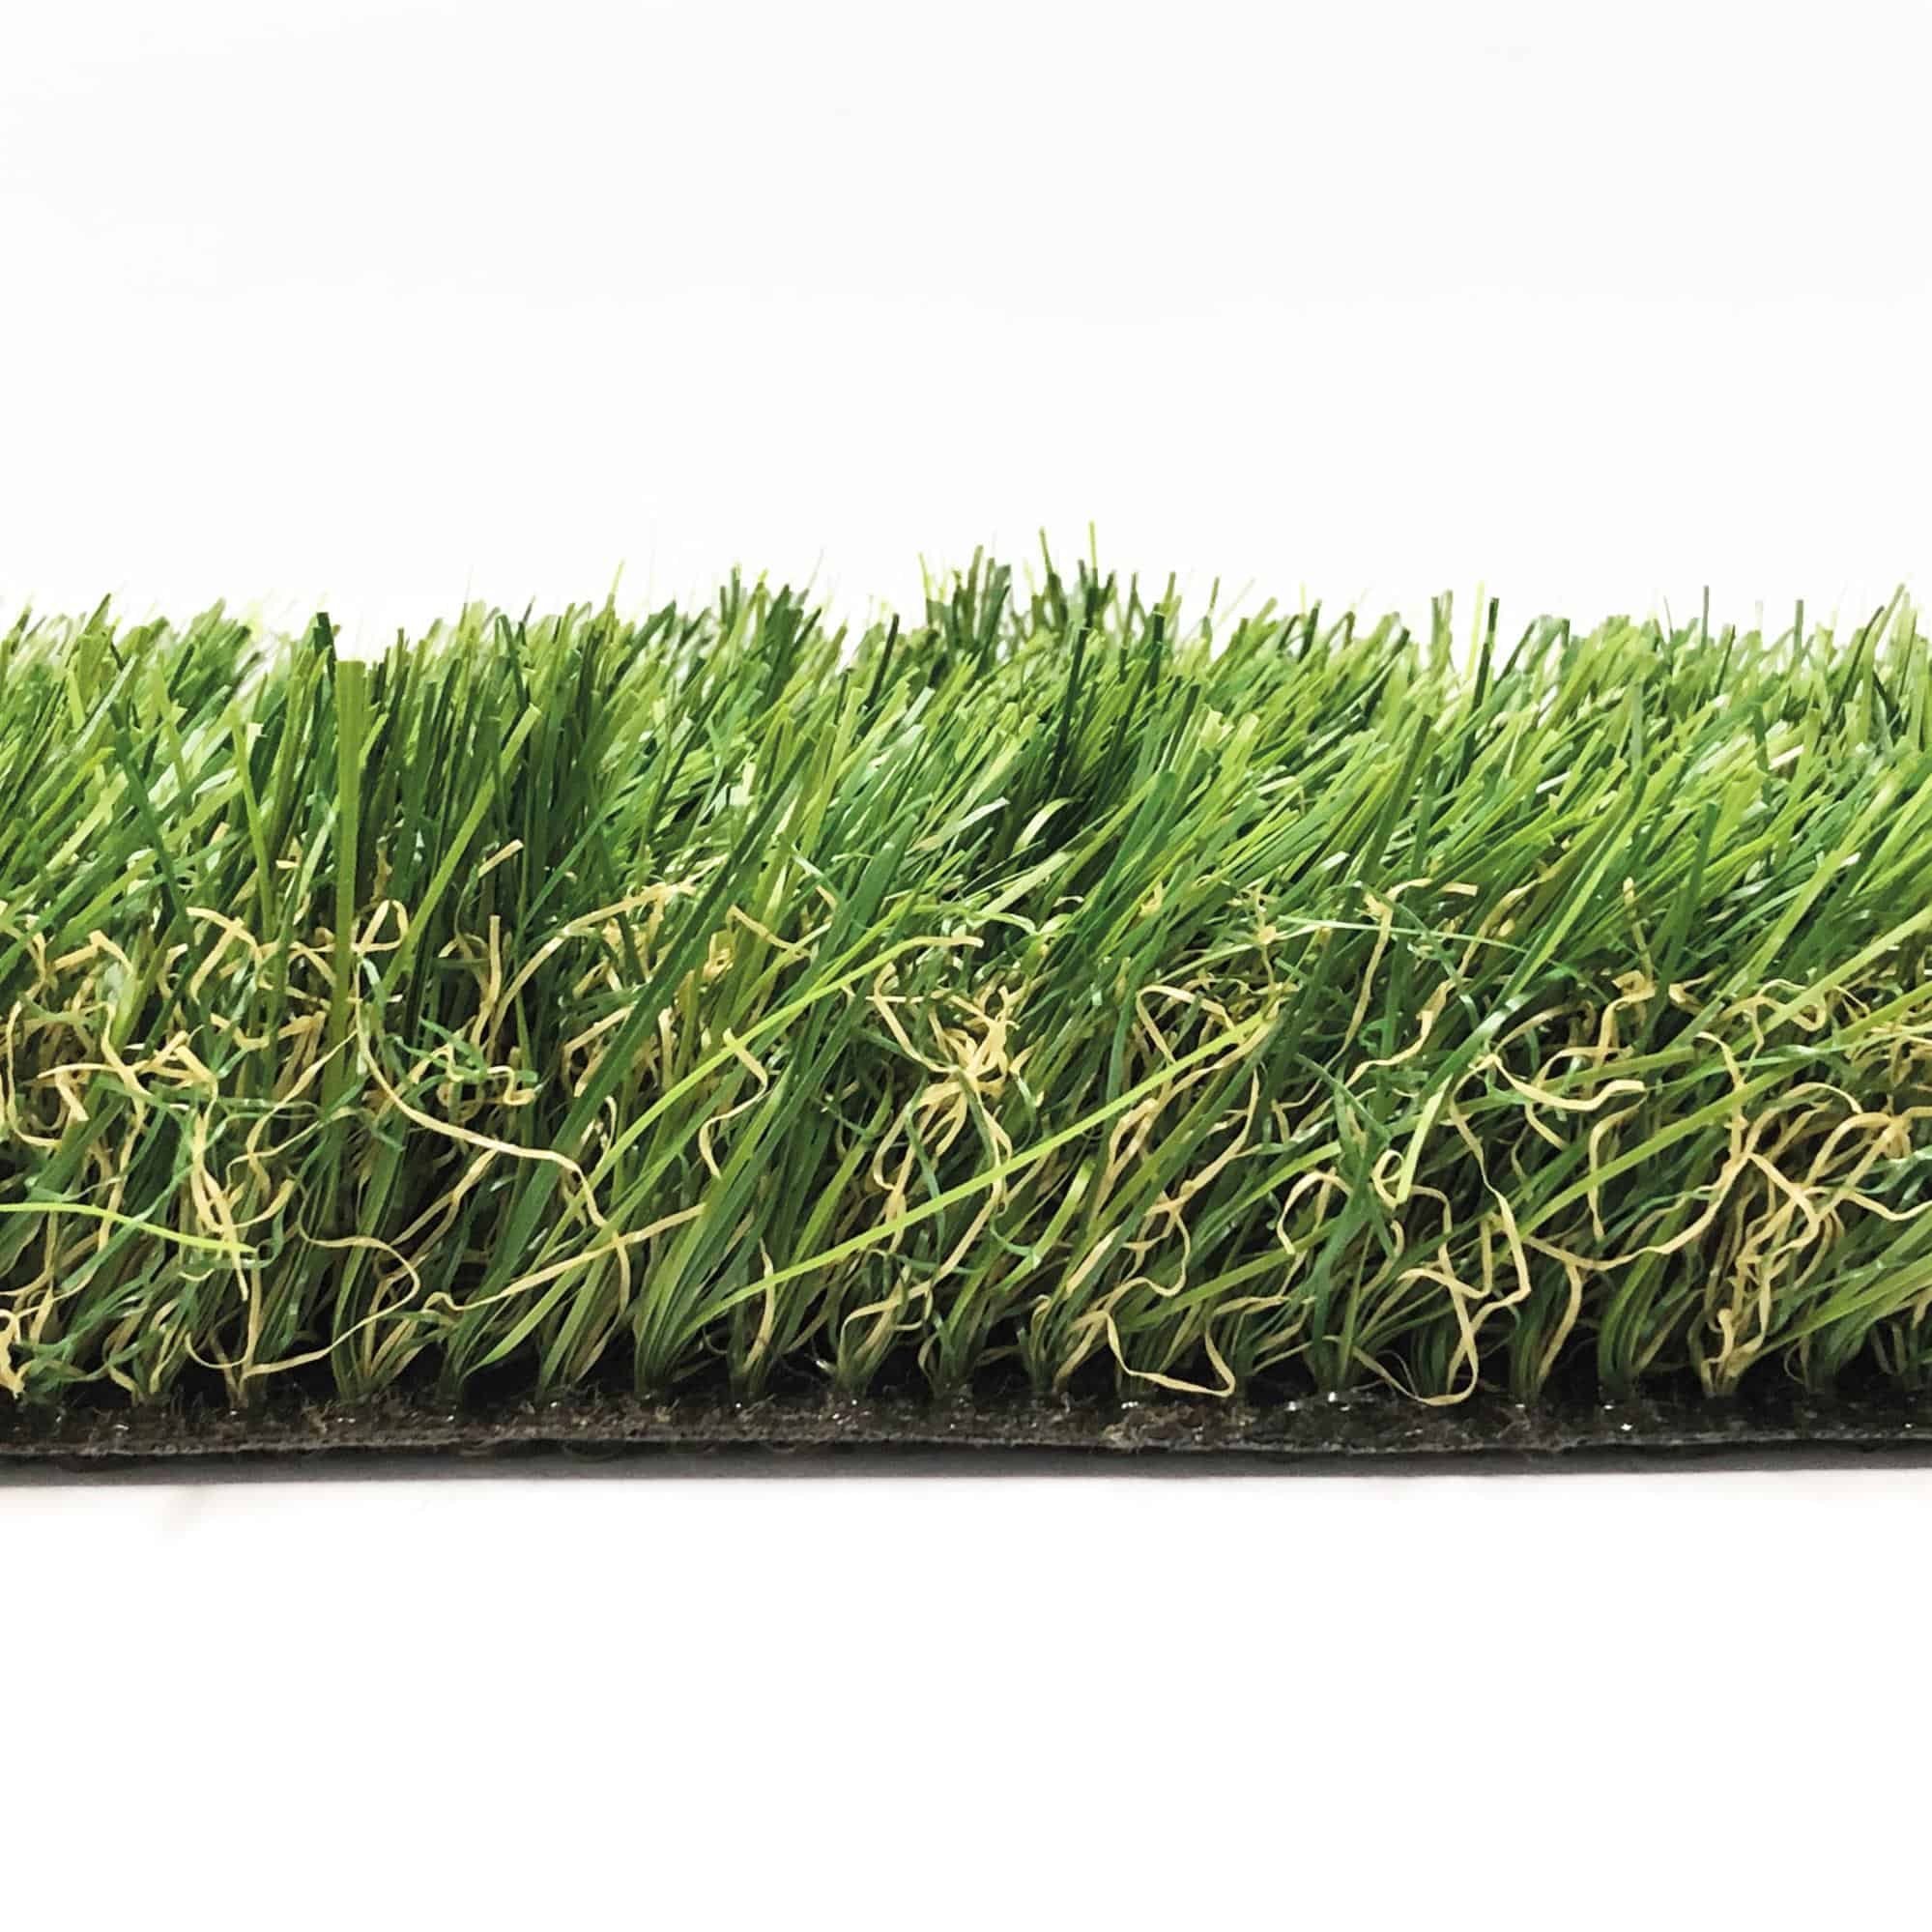 CORE Lawn Natural Artificial Grass 4m Wide Roll 13 m